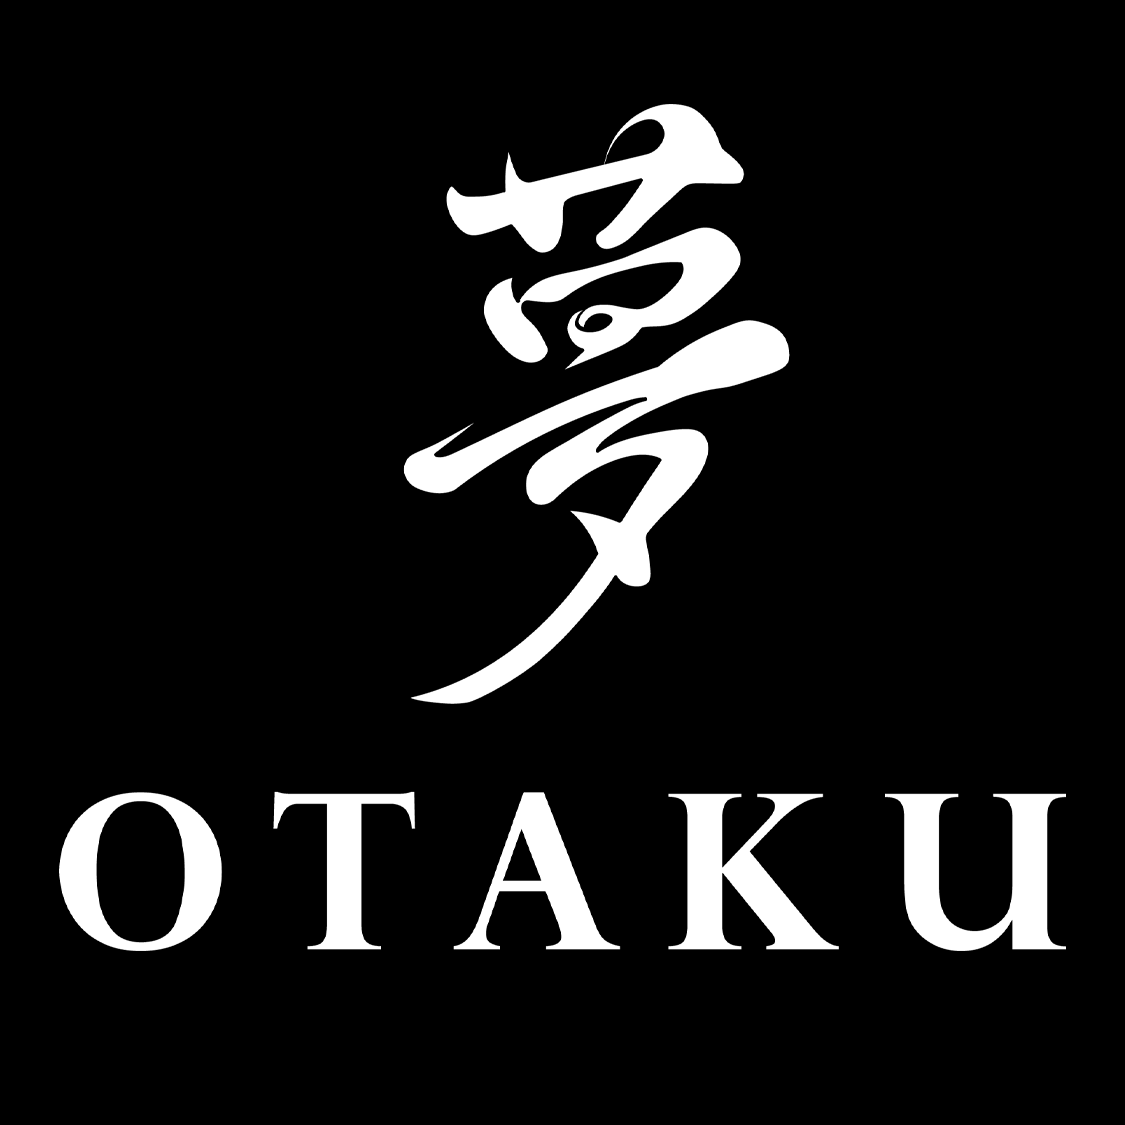 Introducing Otaku!